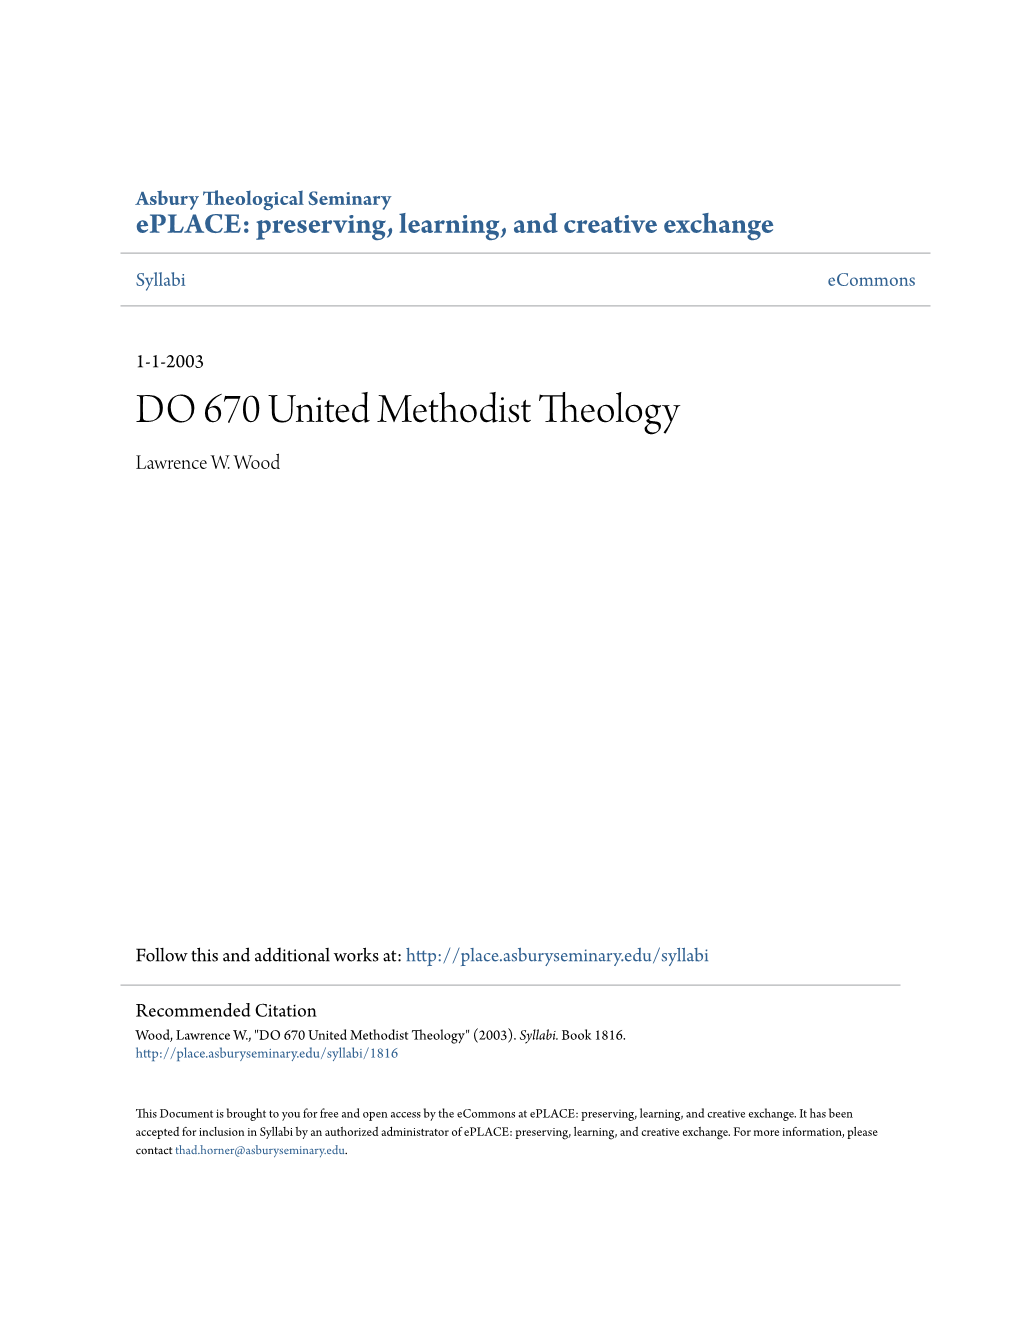 DO 670 United Methodist Theology Lawrence W